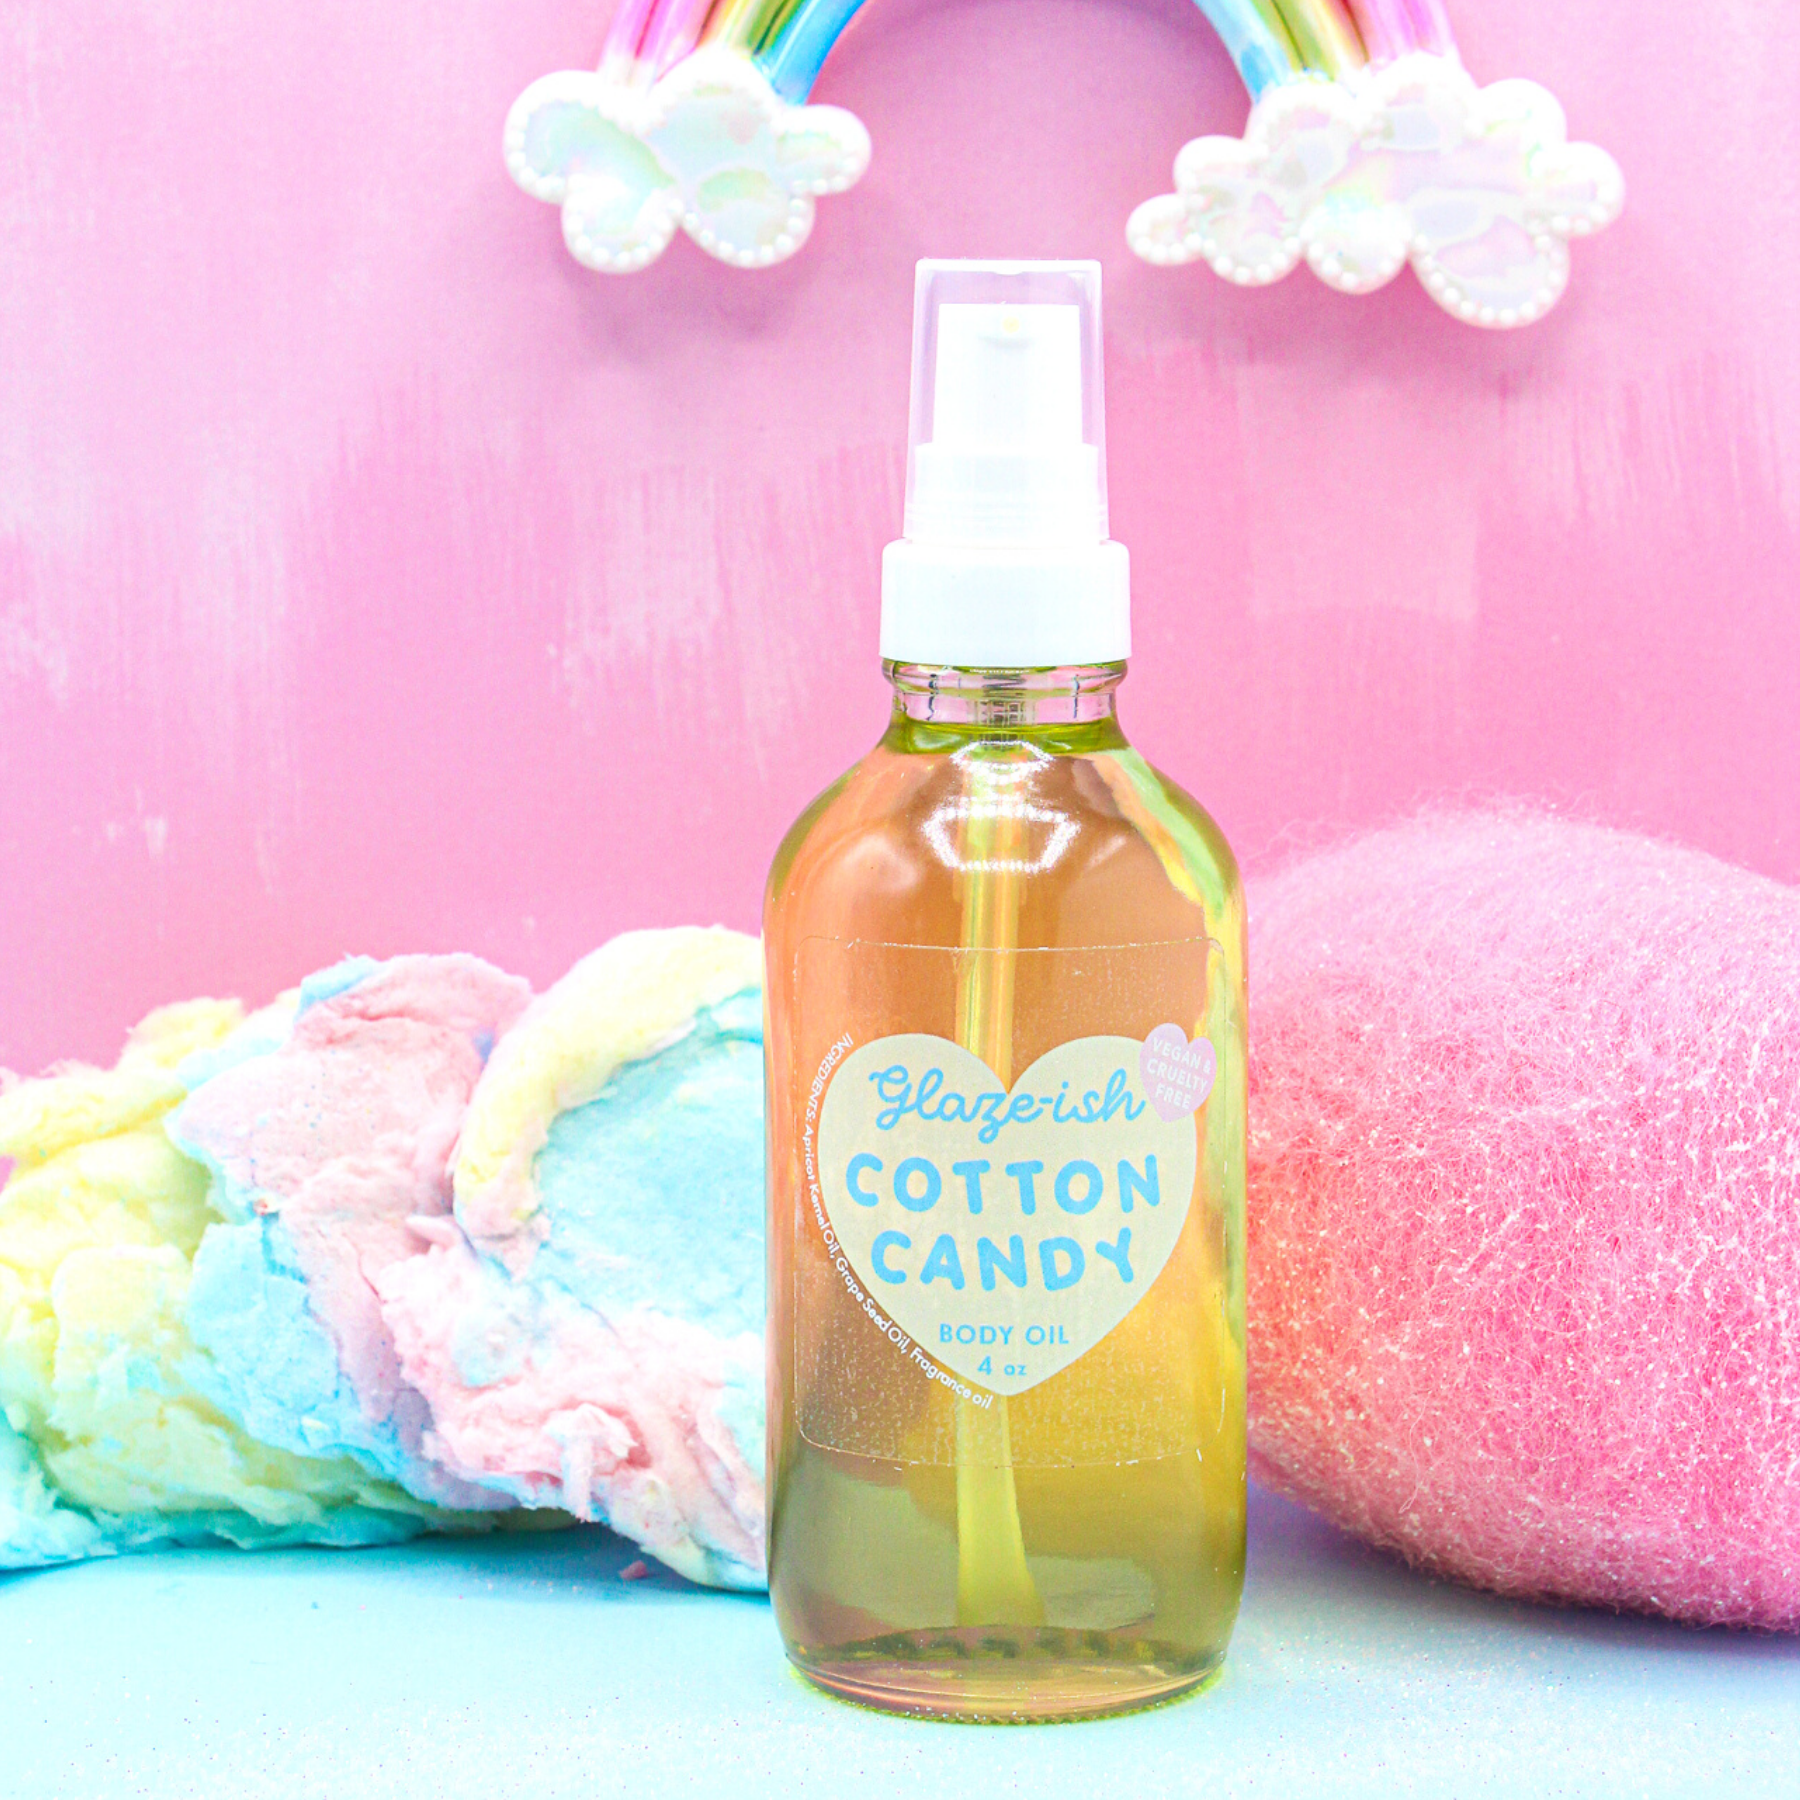 Cotton Candy- Body Oil – GLAZE-ISH